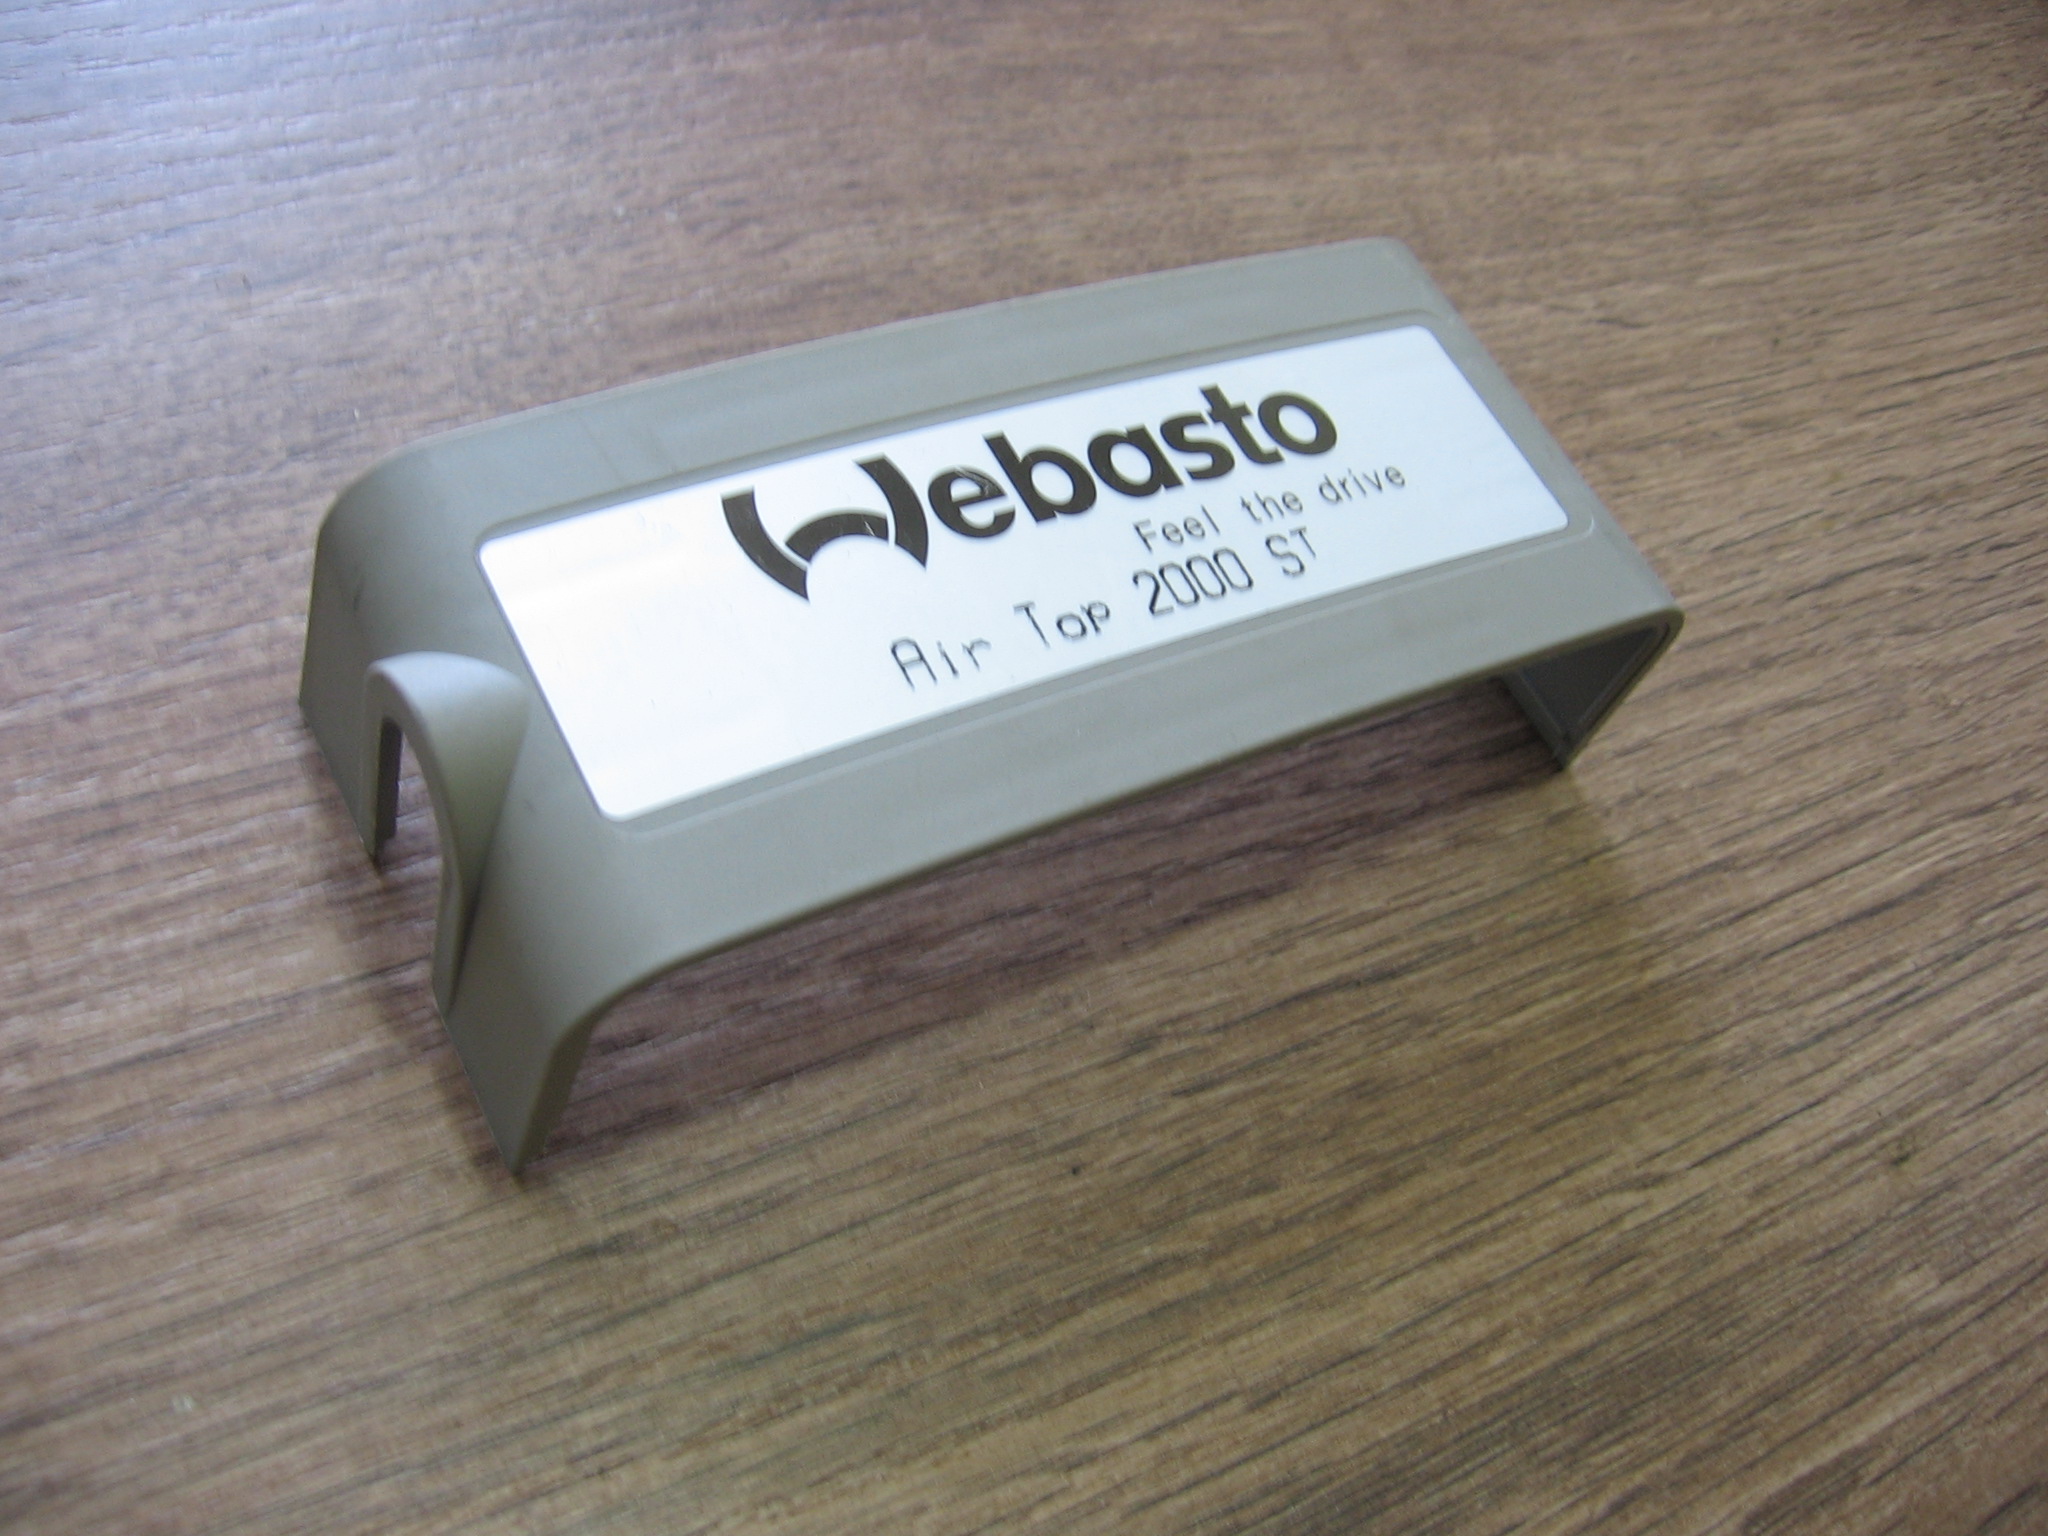 Webasto AirTop 2000ST  Крышка малая